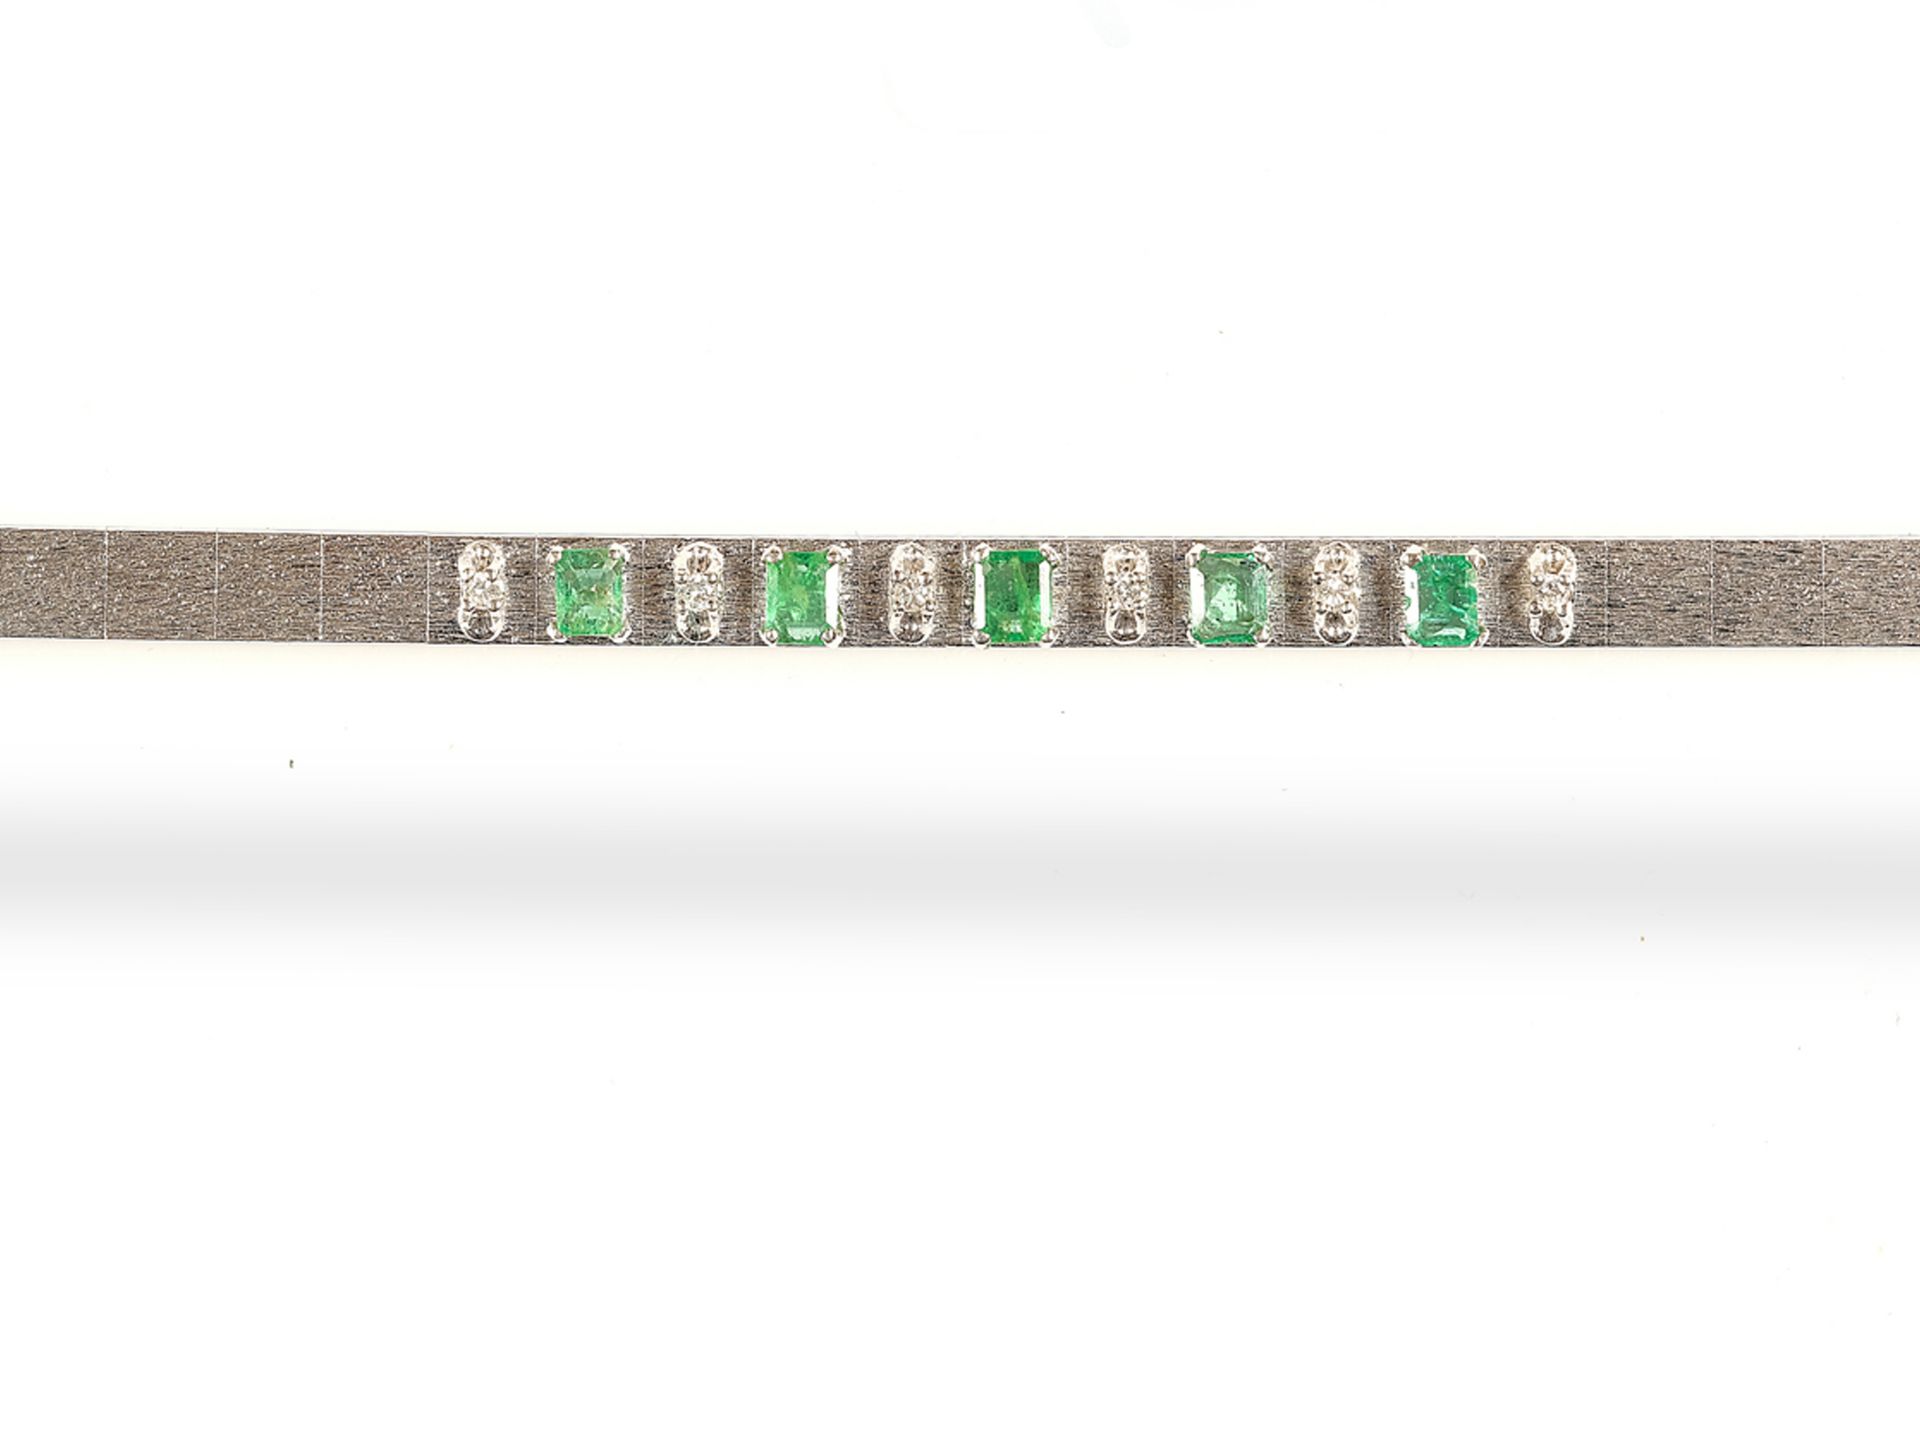 Bracelet, 
Ca. 1970, 
White gold, 14 carat